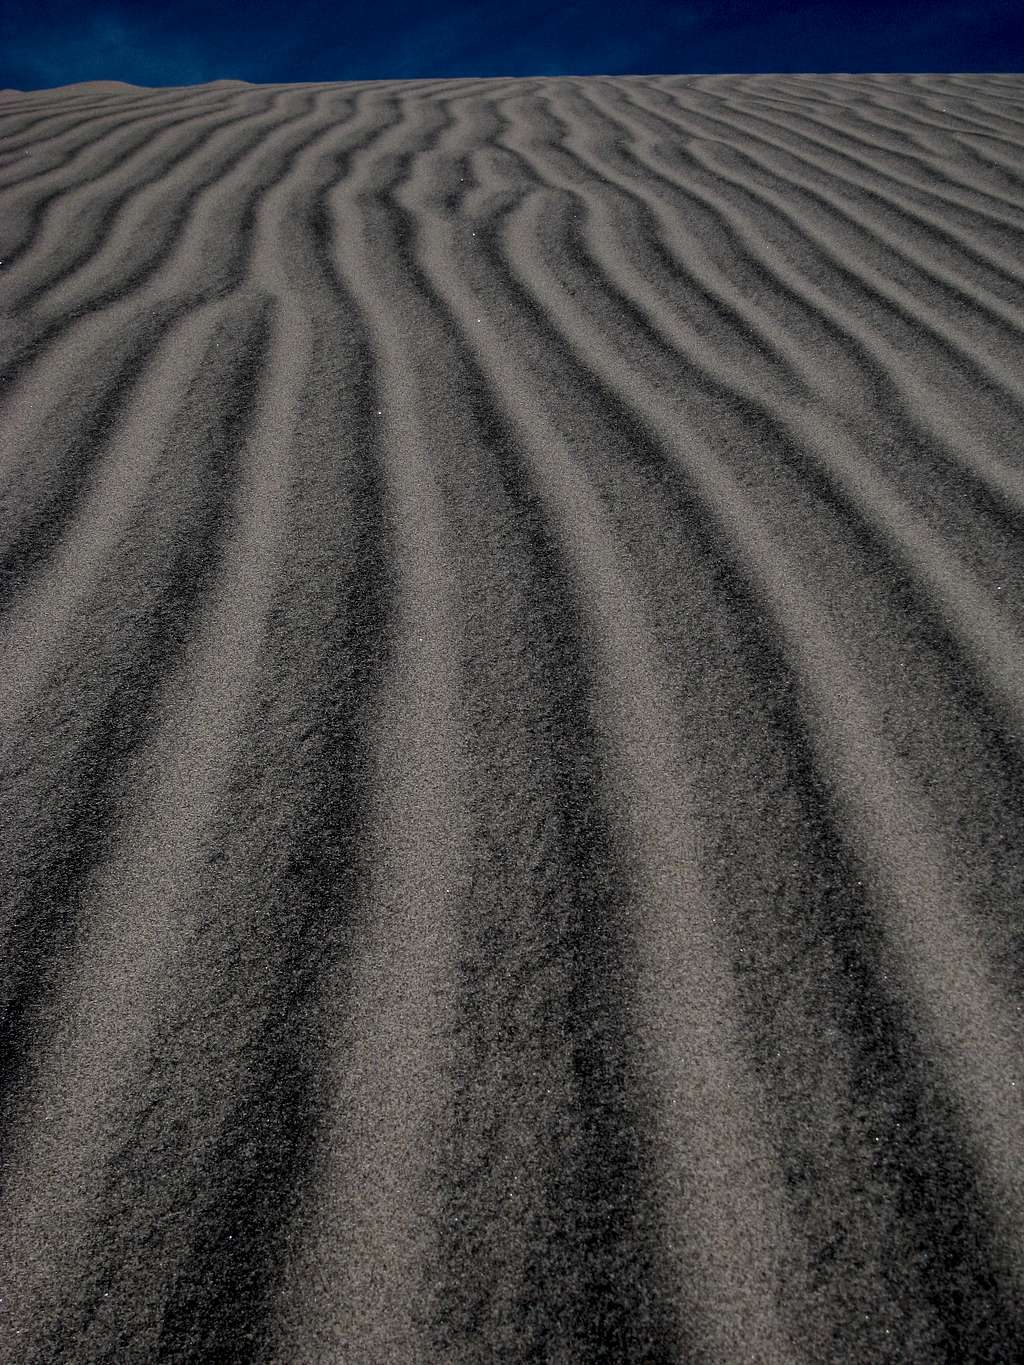 Great Sand Dunes NP - sand dune - close up